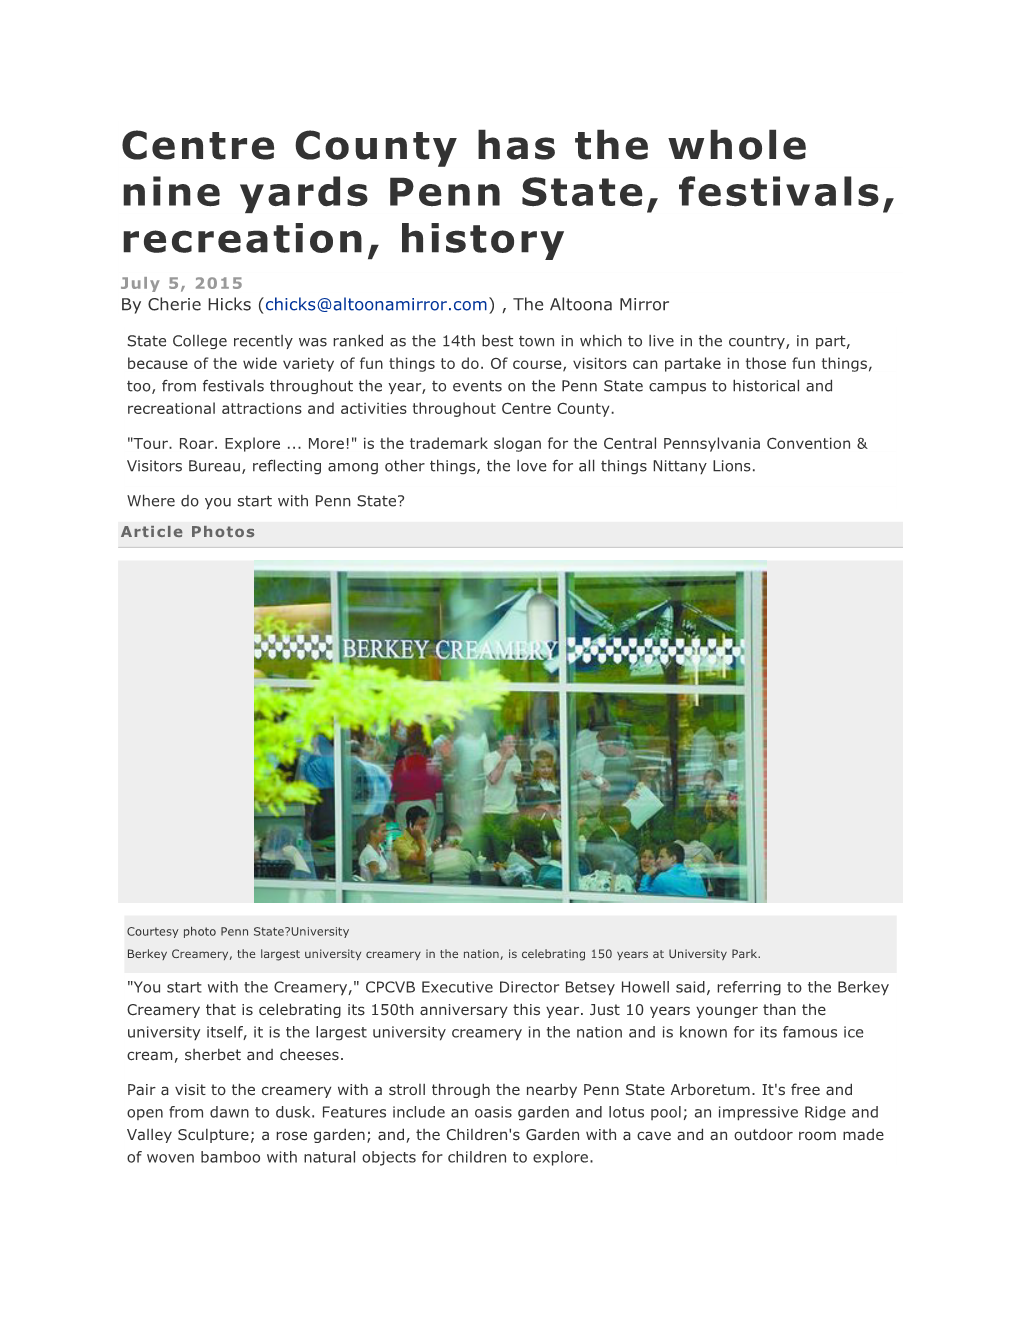 Centre County Has the Whole Nine Yards Penn State, Festivals, Recreation, History July 5, 2015 by Cherie Hicks (Chicks@Altoonamirror.Com) , the Altoona Mirror